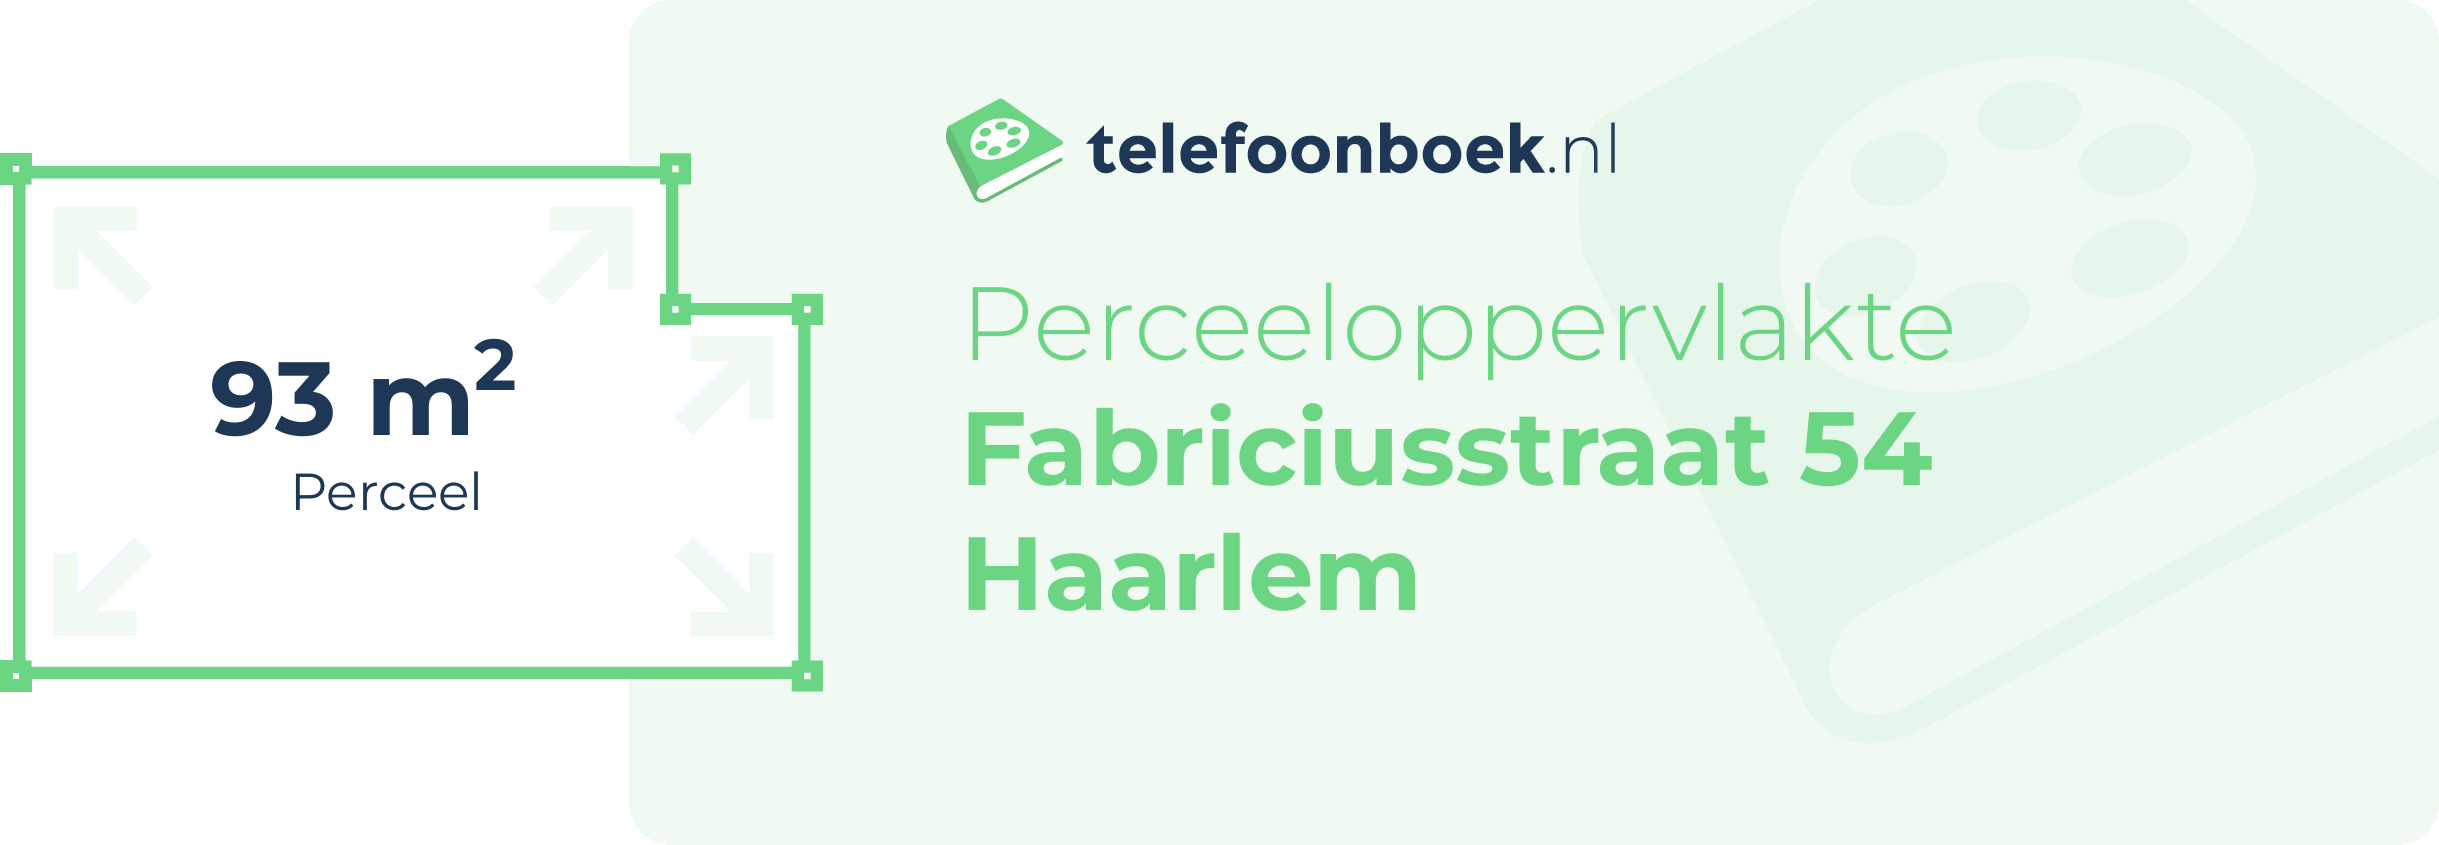 Perceeloppervlakte Fabriciusstraat 54 Haarlem